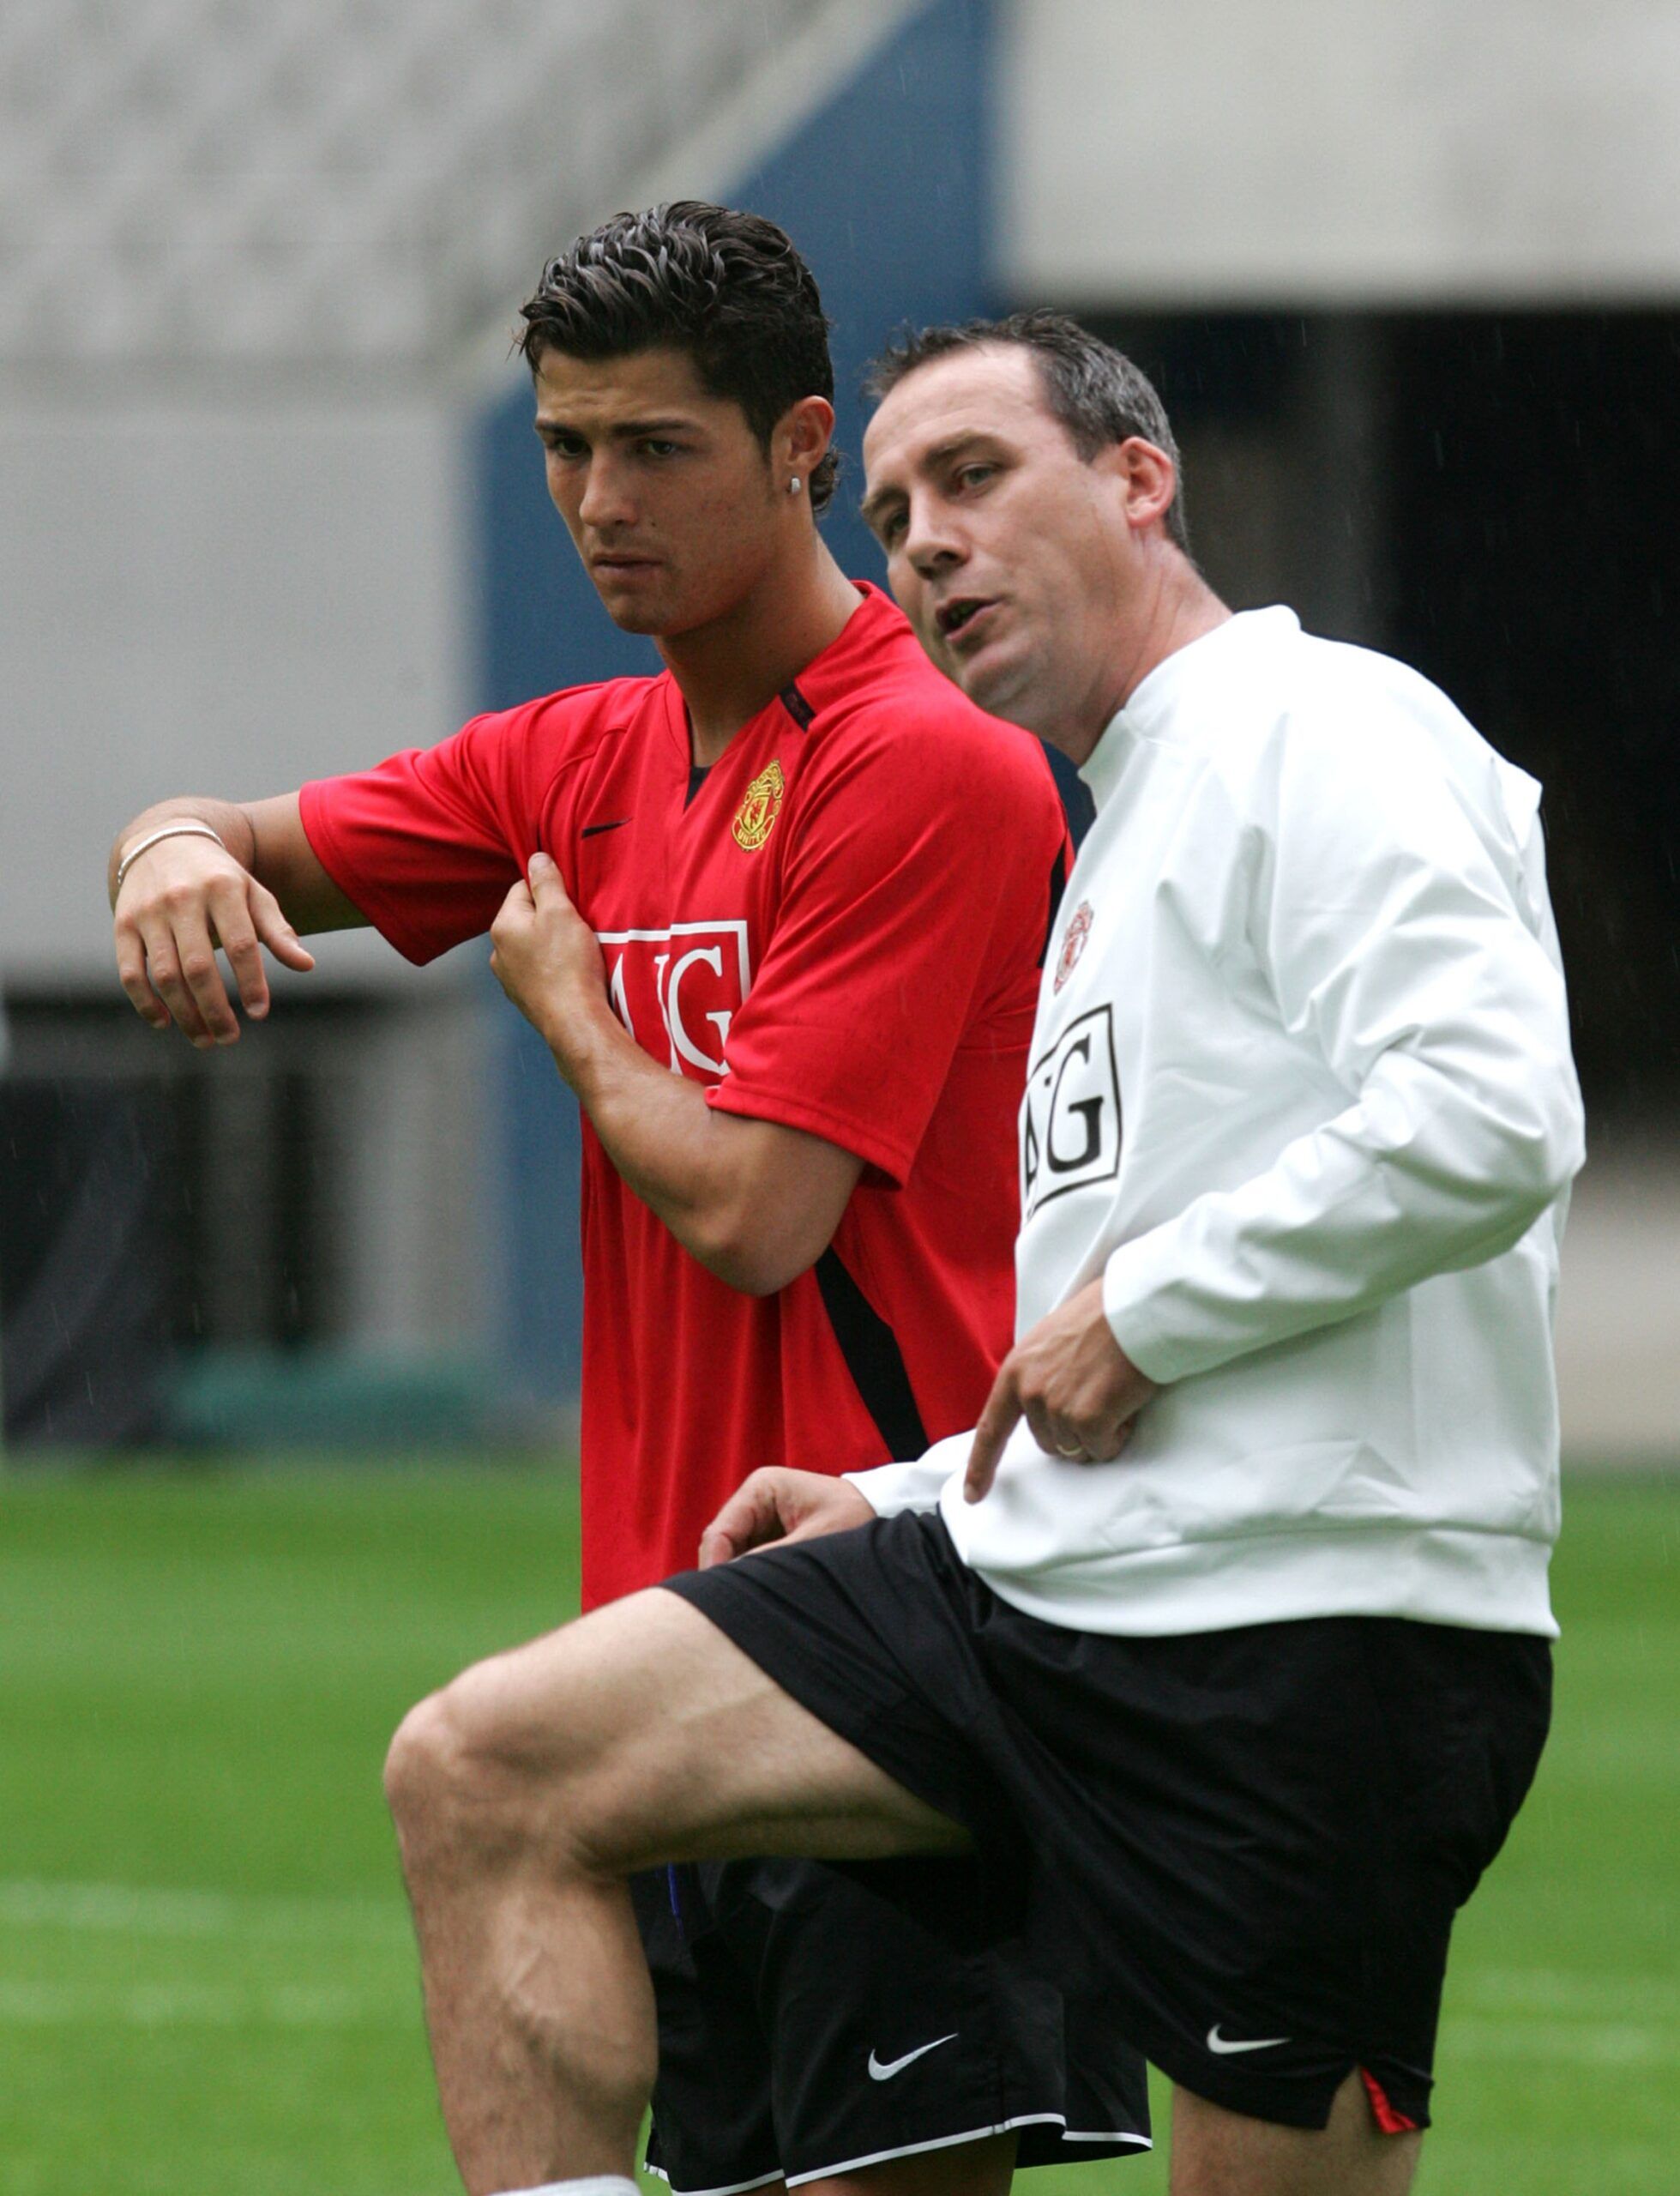 Ronaldo training at Man Utd in 2007